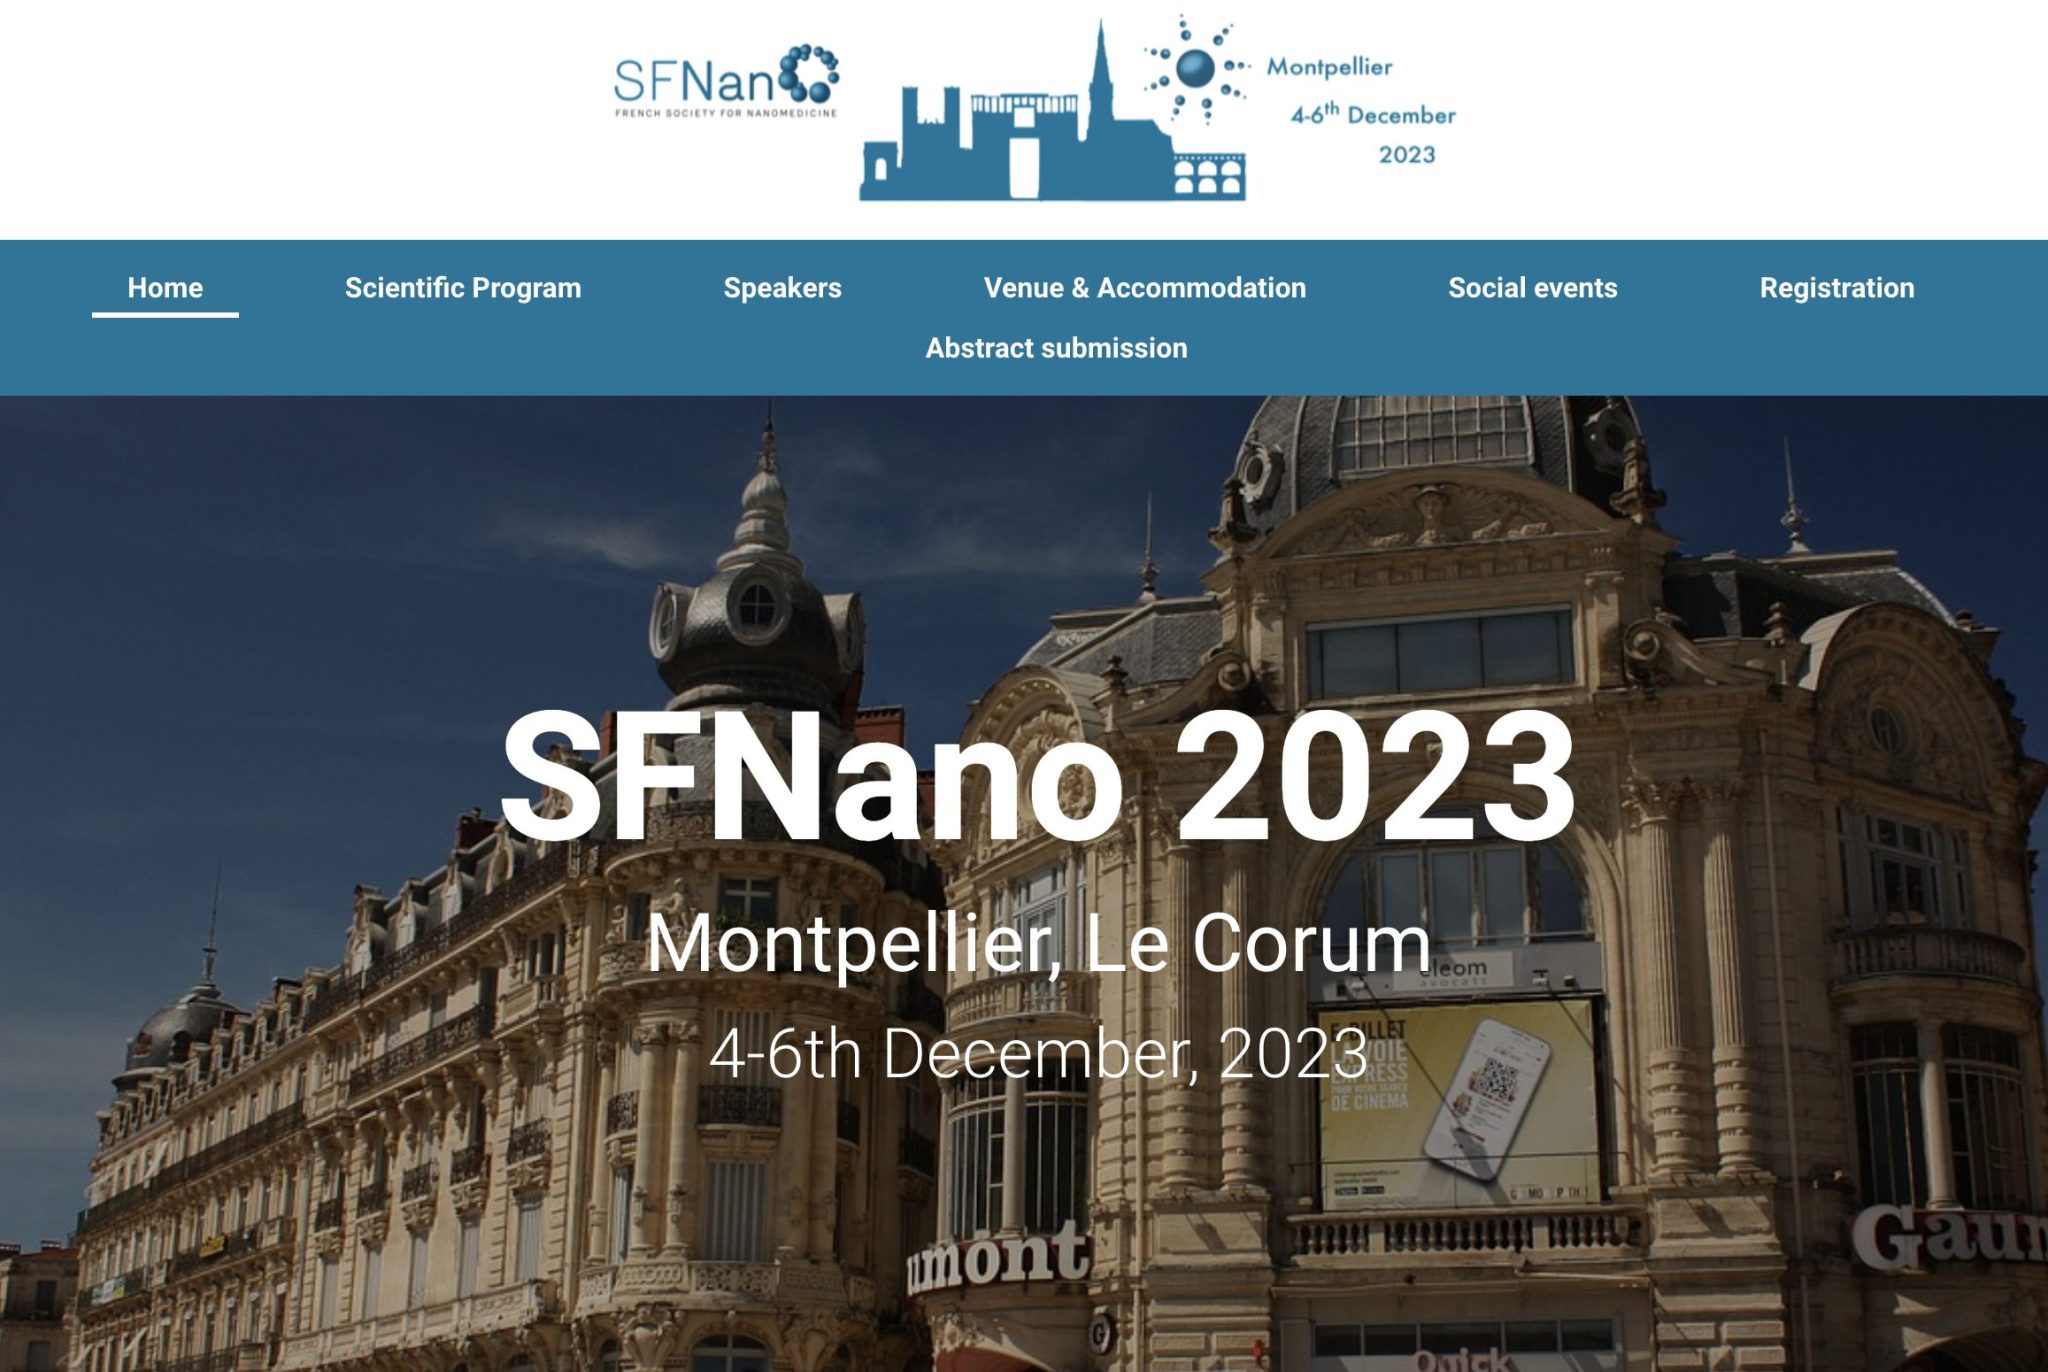 SFNano 2023 in Montpellier